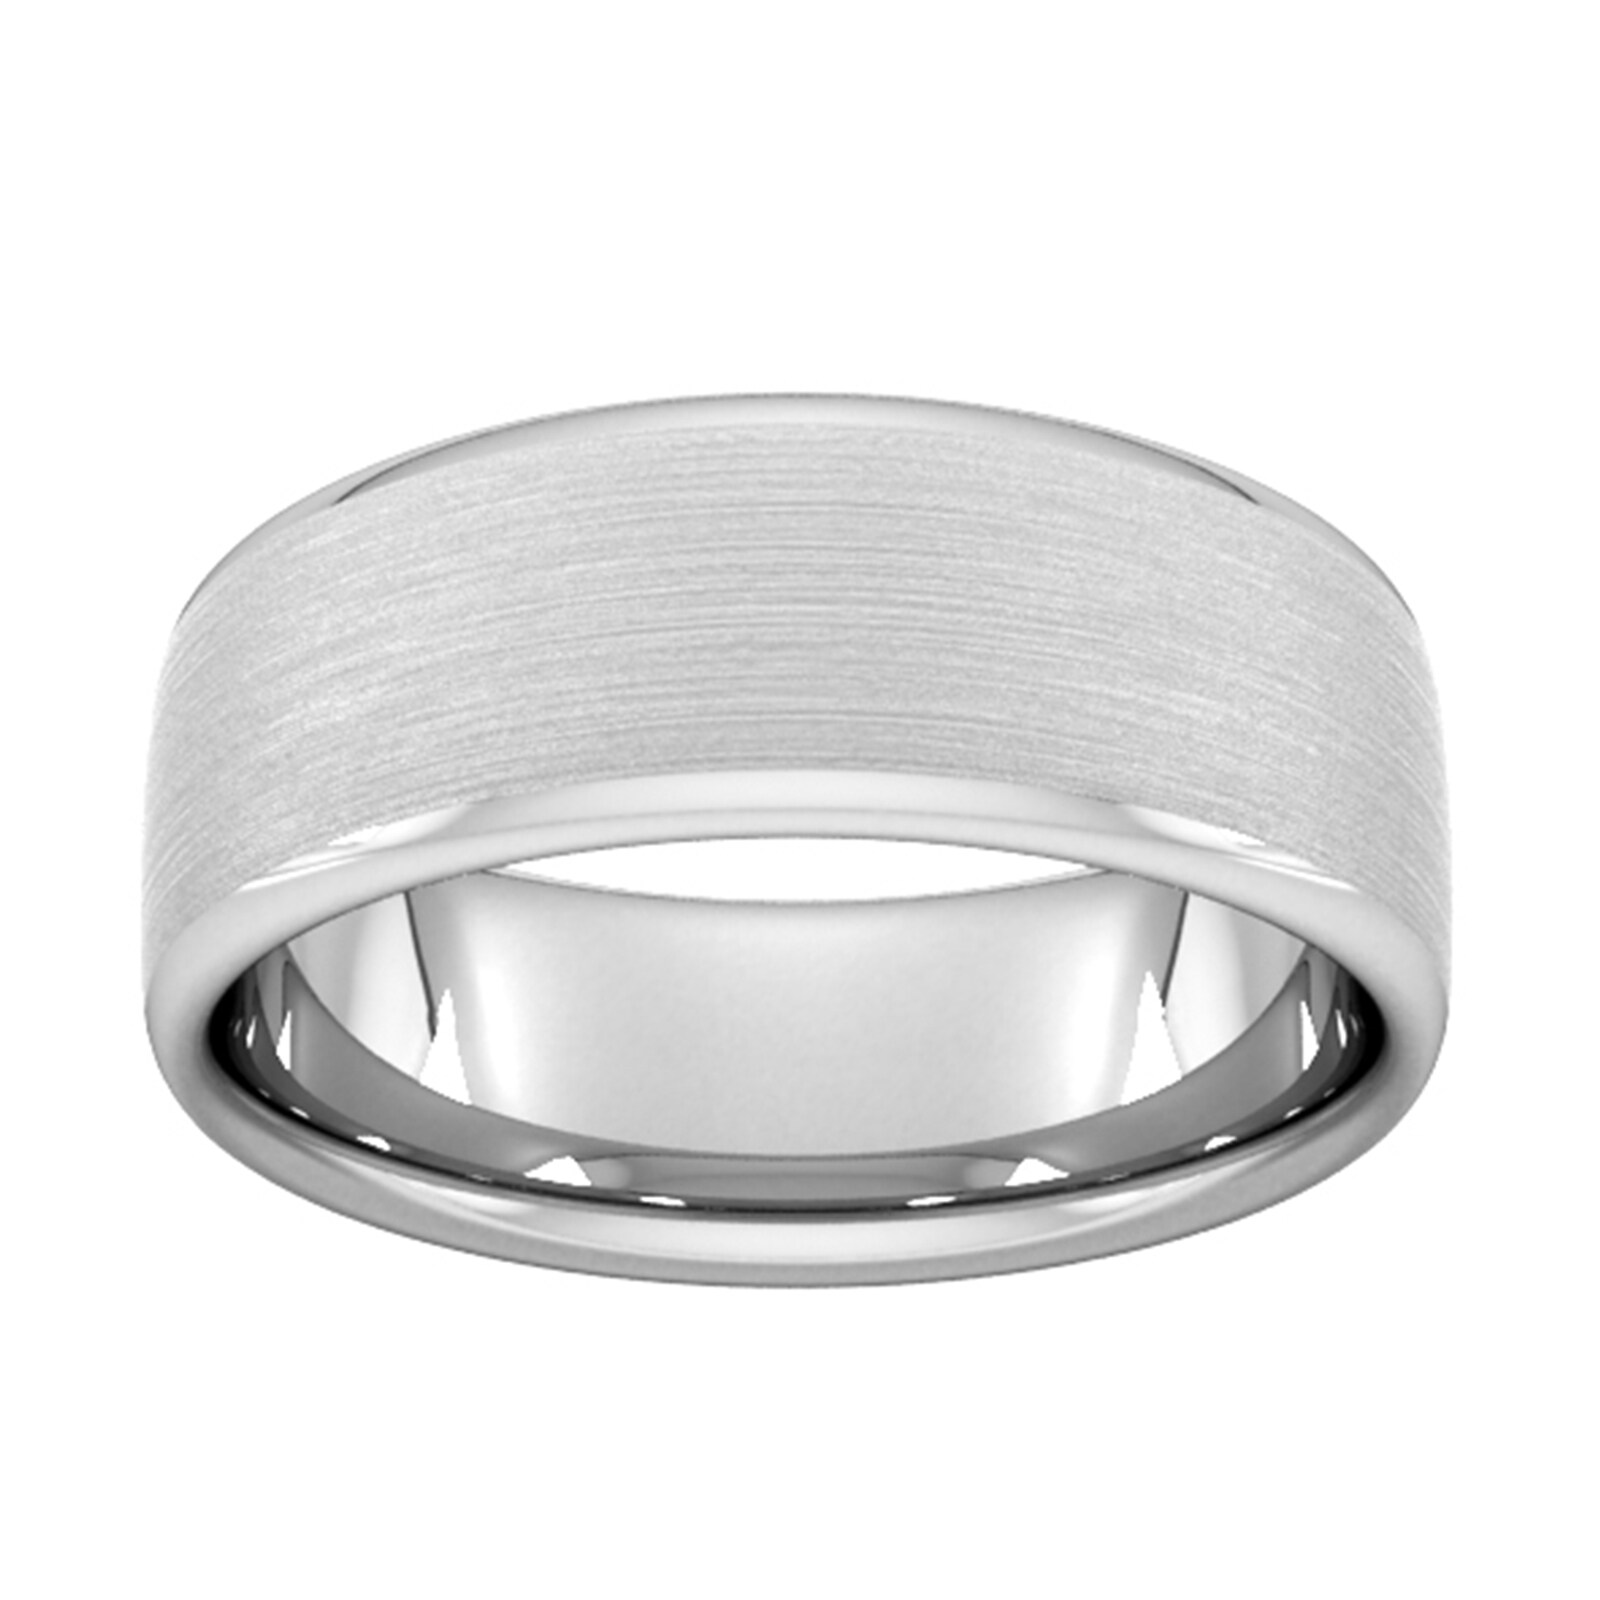 8mm D Shape Standard Matt Finished Wedding Ring In 9 Carat White Gold - Ring Size V